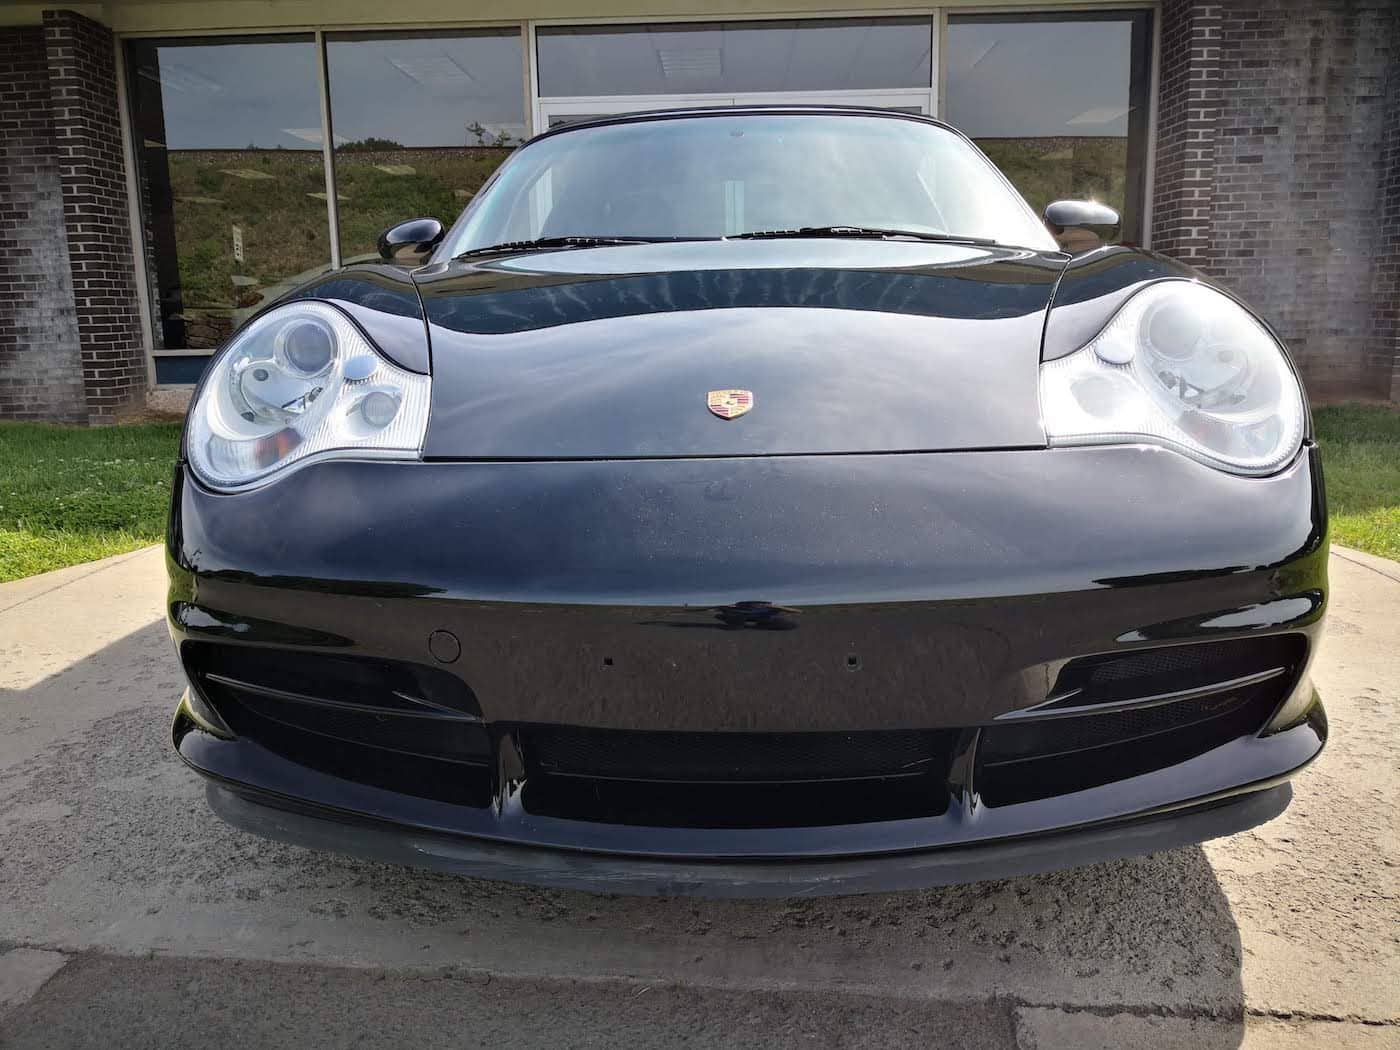 2004 Porsche GT3 - 2004 Porsche GT3 - Black / Black - 26k miles - Used - VIN WP0AC29934S692595 - 26,348 Miles - 6 cyl - 2WD - Manual - Black - Blauvelt, NY 10913, United States